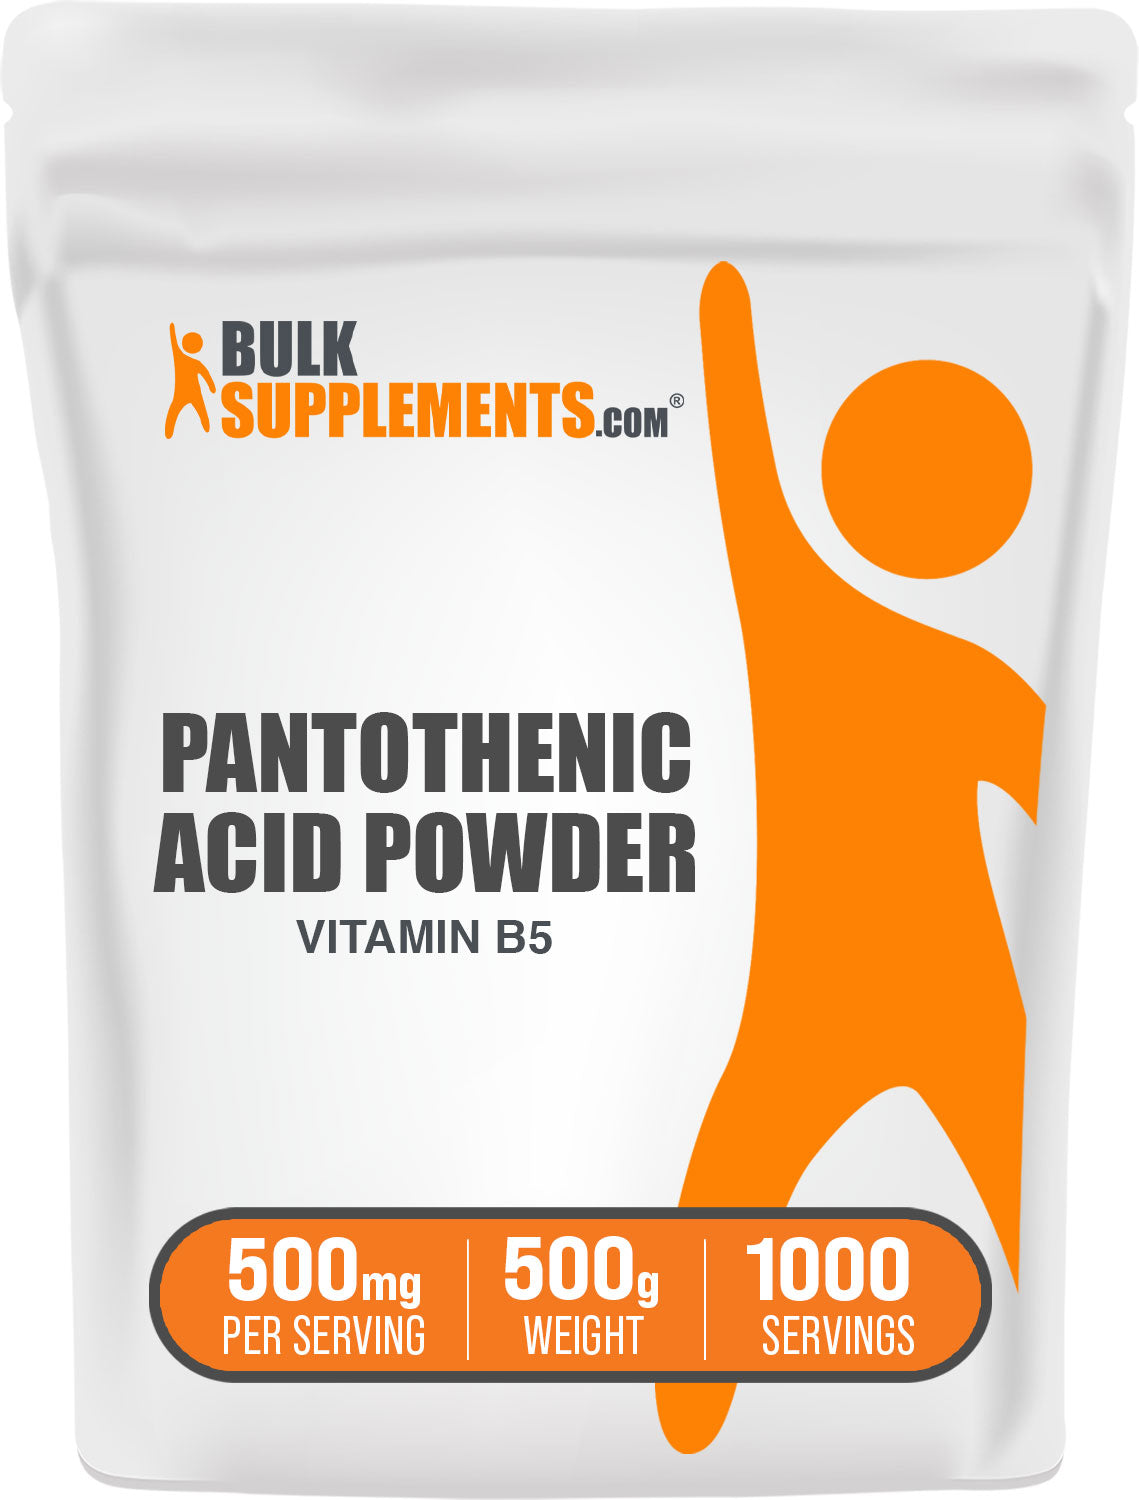 BulkSupplements Pantothenic Acid Powder Vitamin B5 500g bag